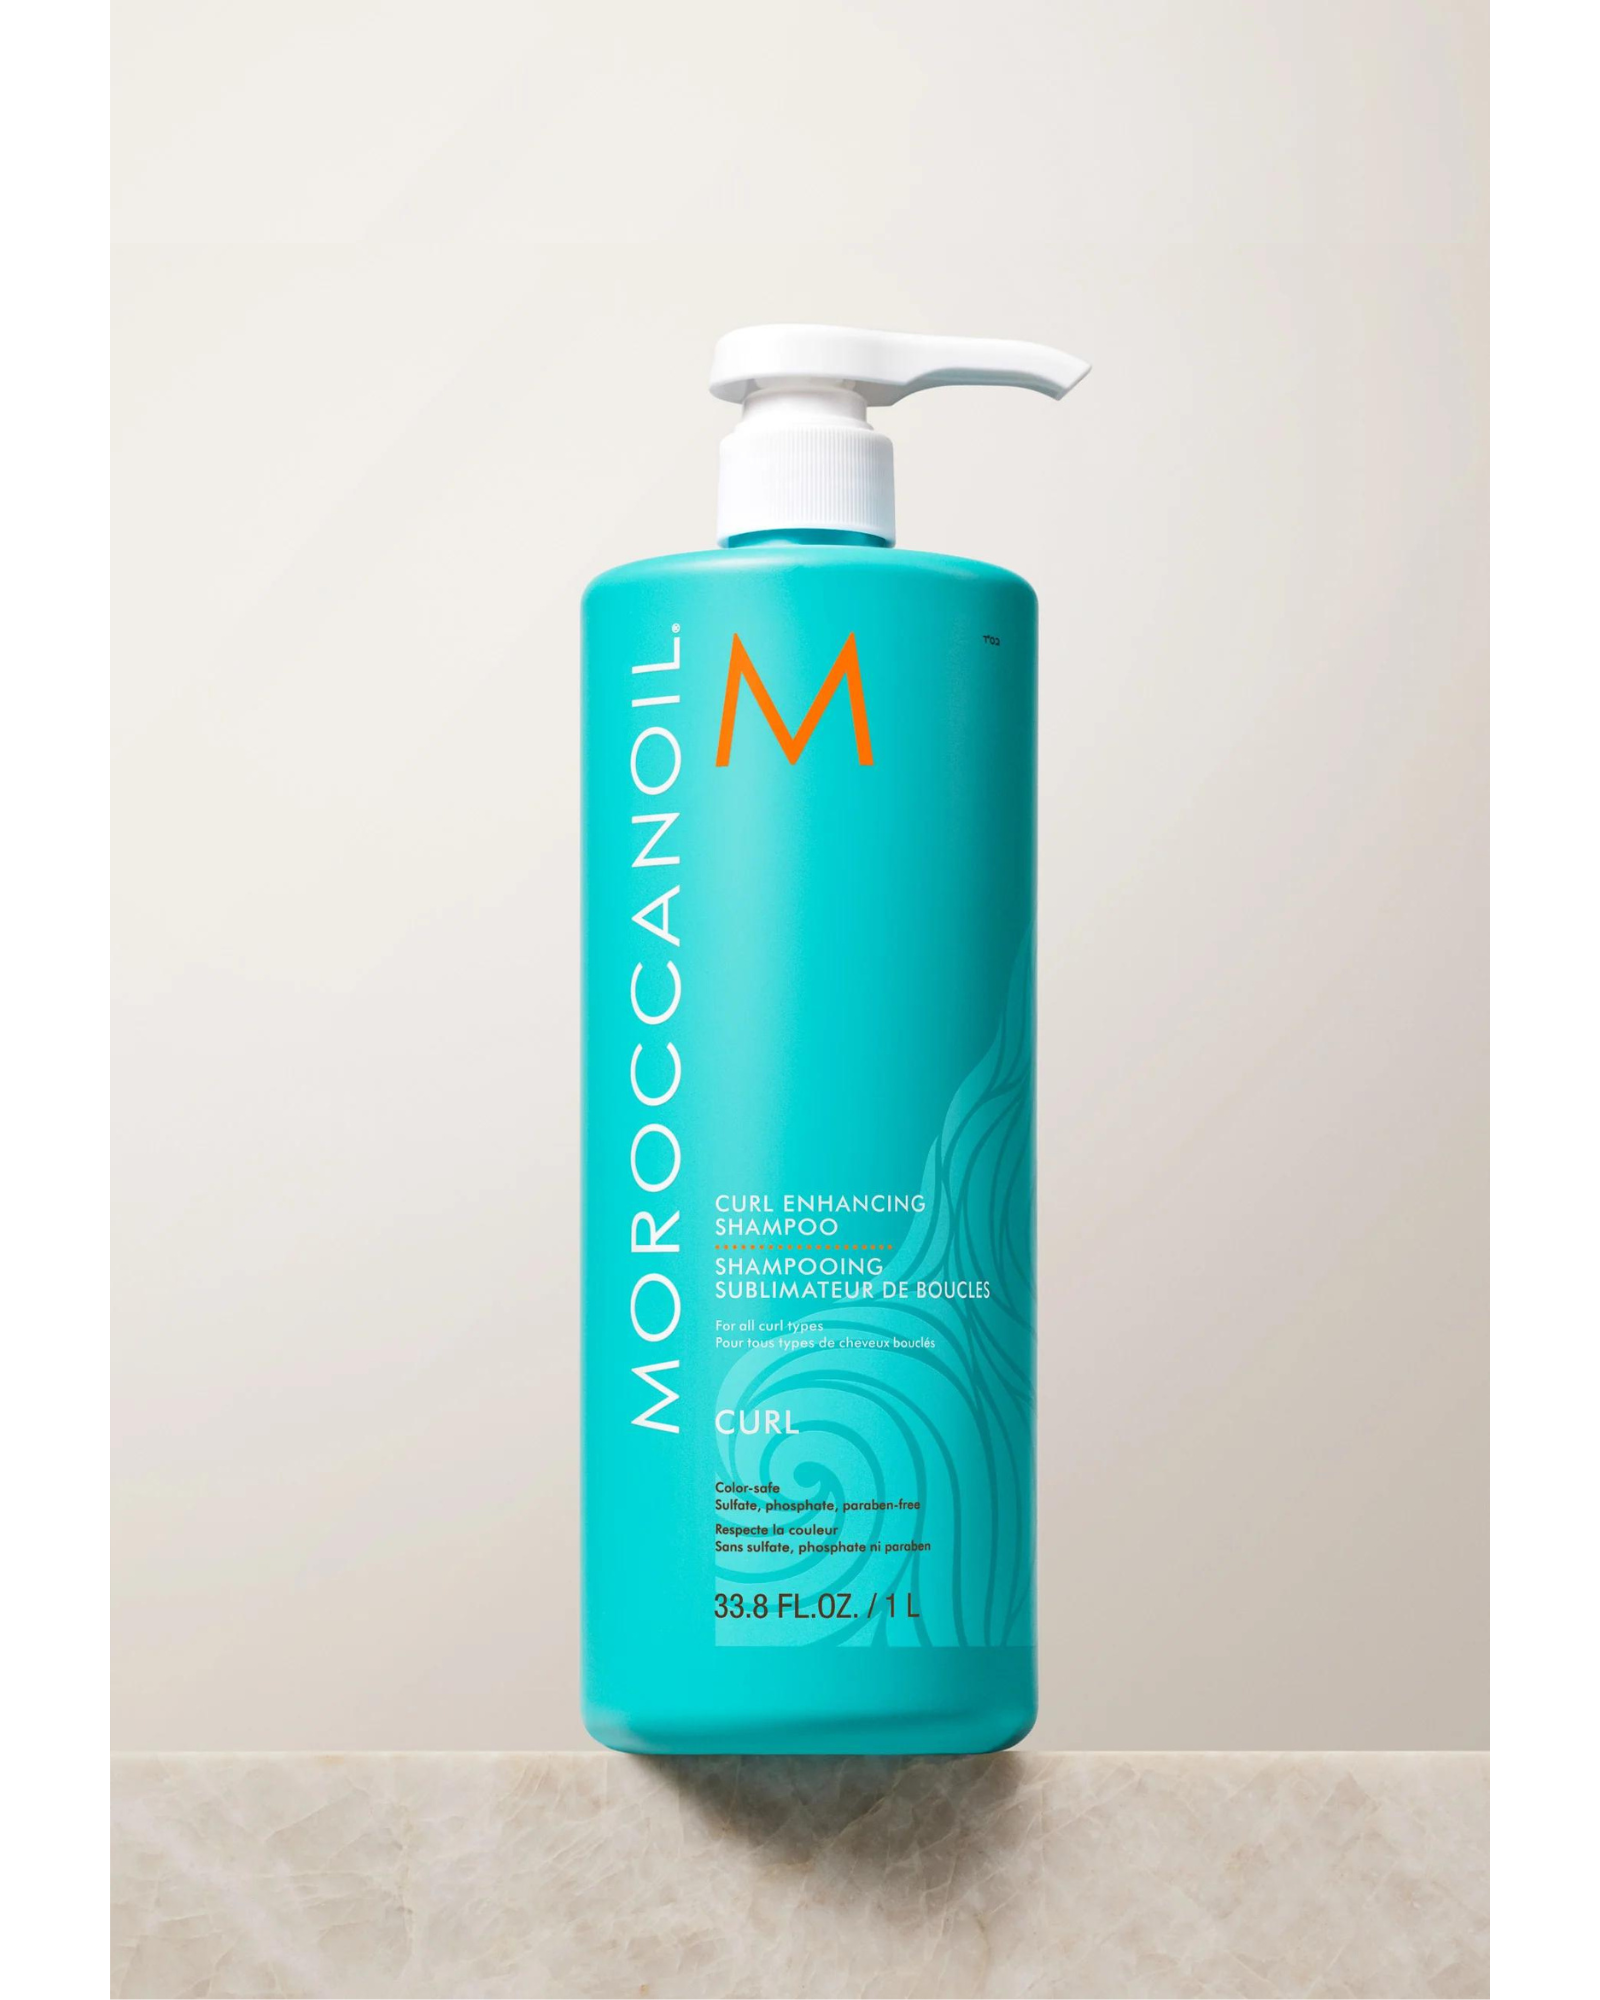 Gentle shampoo for curls (MoroccanOil Curl Enhancing Shampoo)